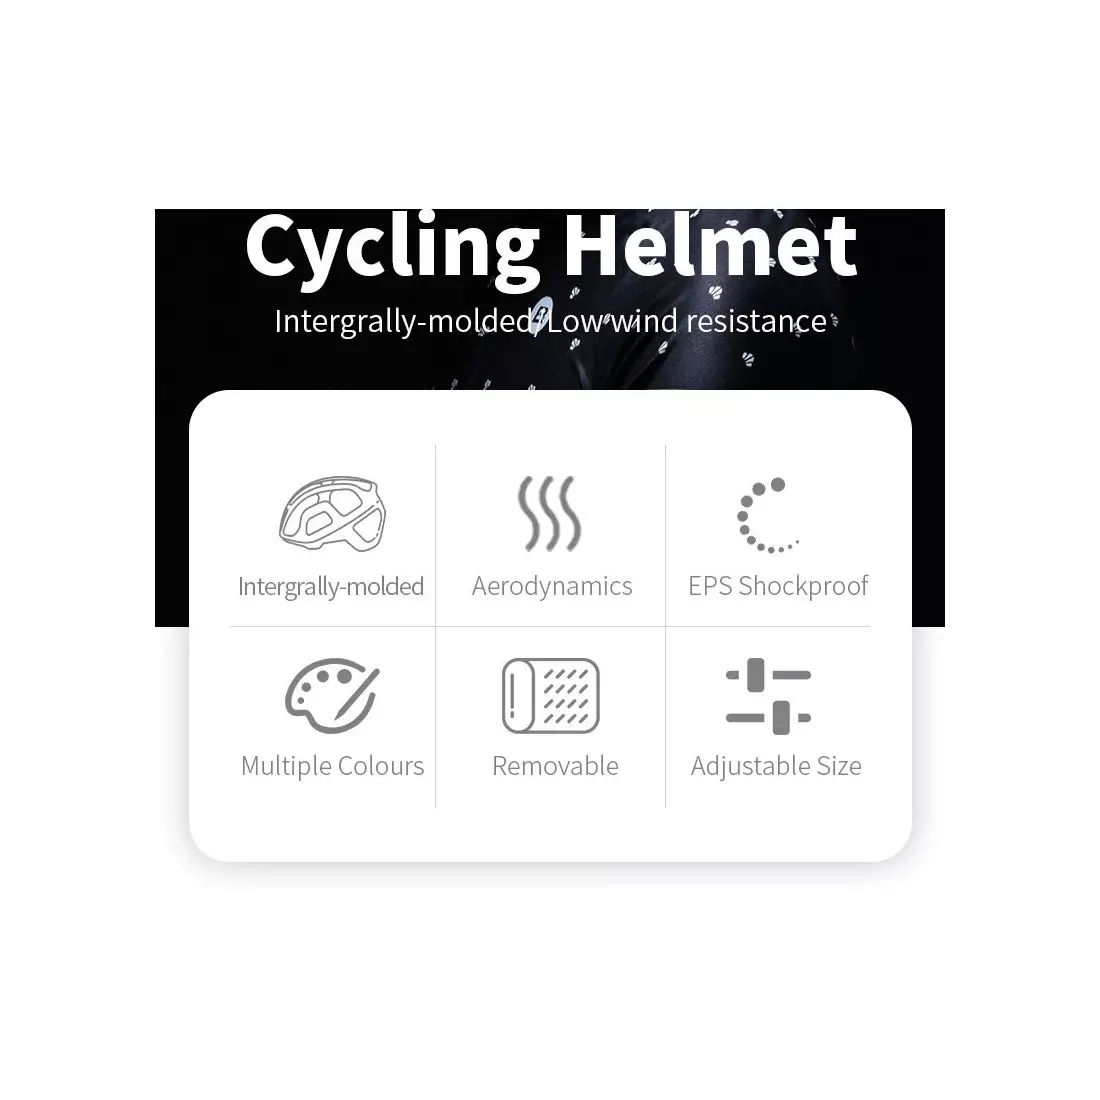 Rockbros Road bike helmet, grey HC-58TI